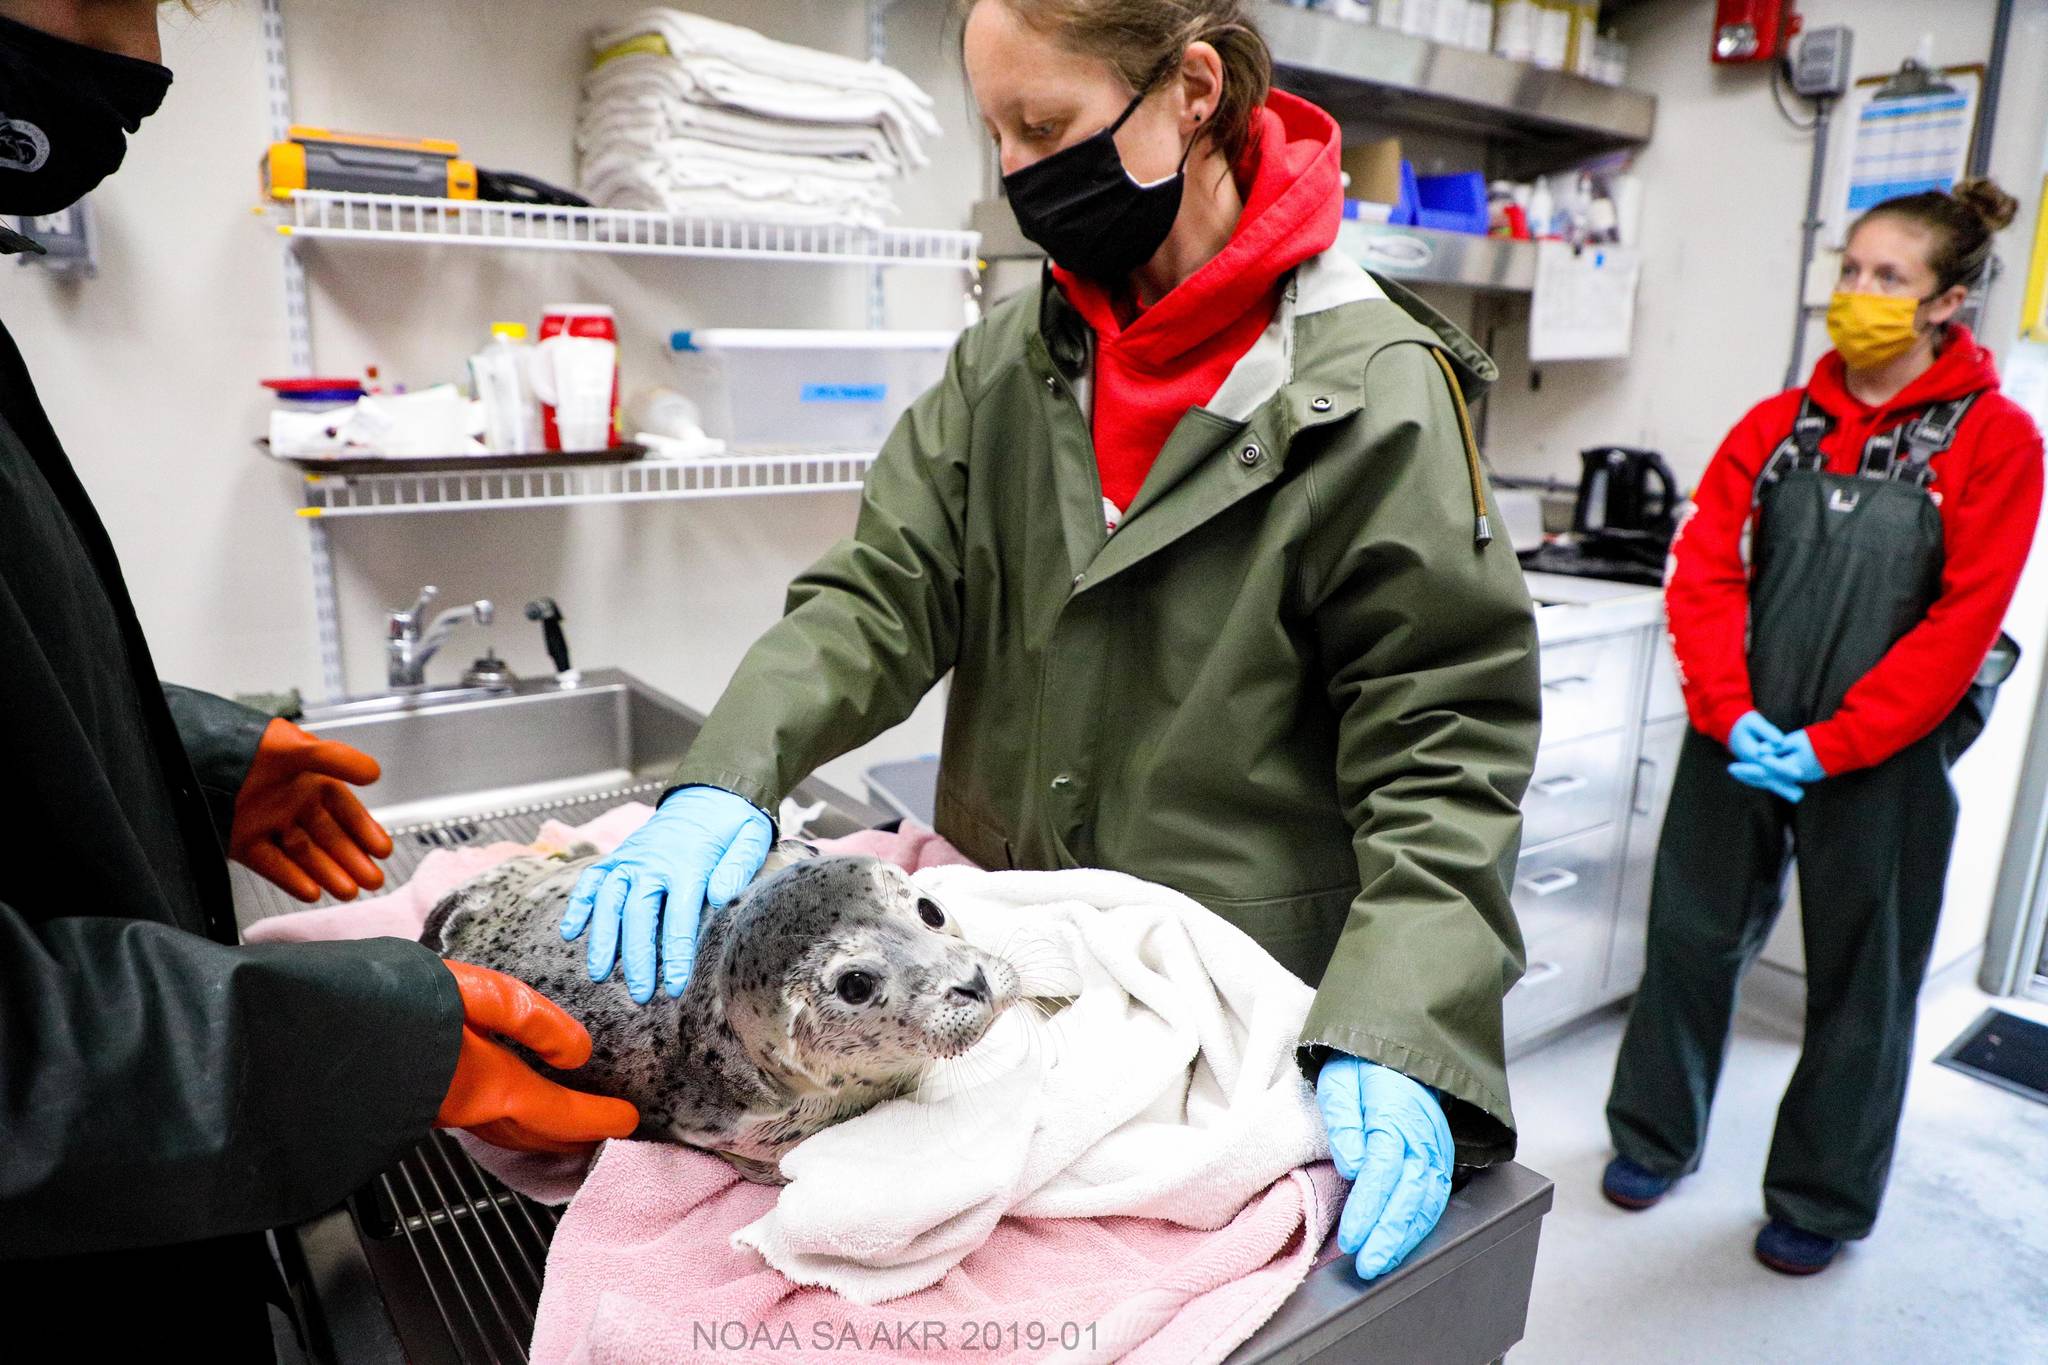 Seward SeaLife Center officials examine a recently admitted harbor seal pup on June 22, 2021. (Kaiti Chritz / Seward SeaLife Center)